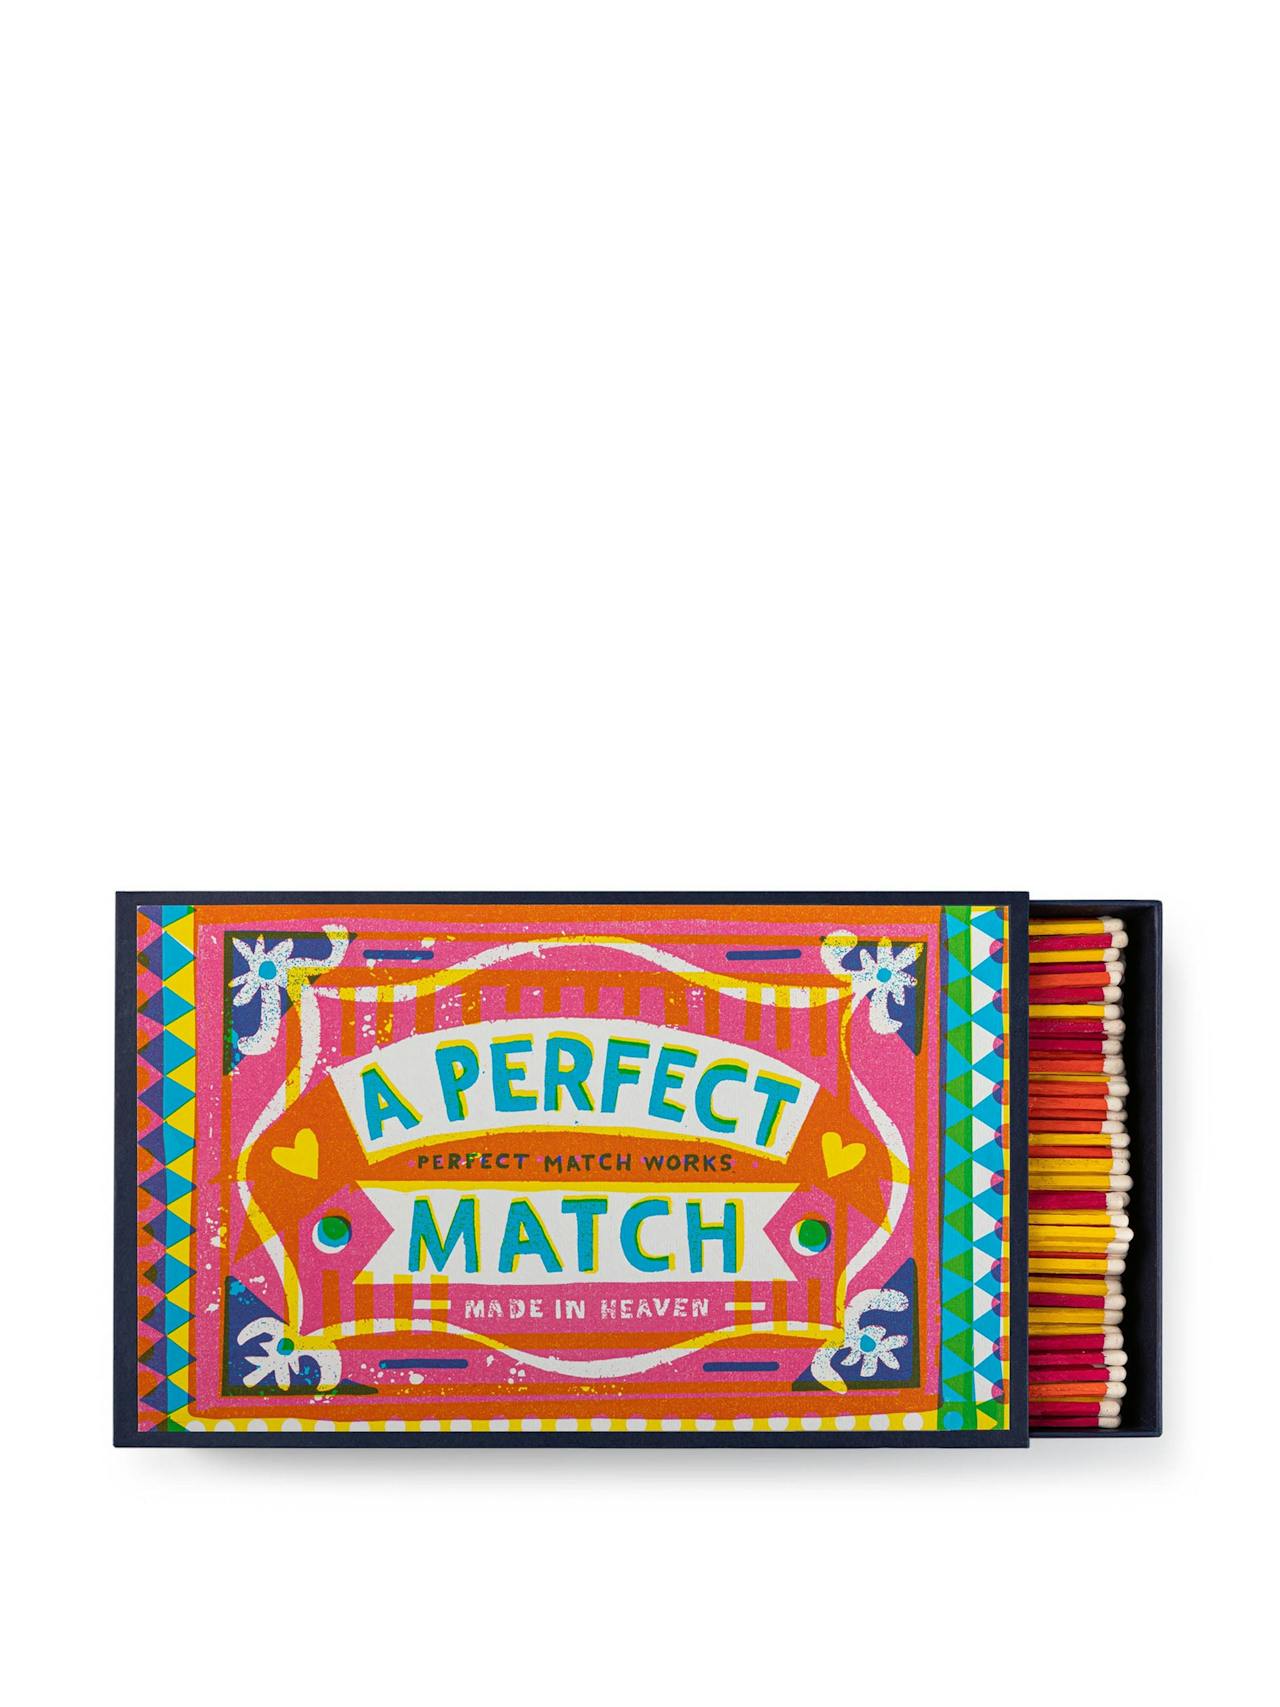 Perfect Match Giant matchbox